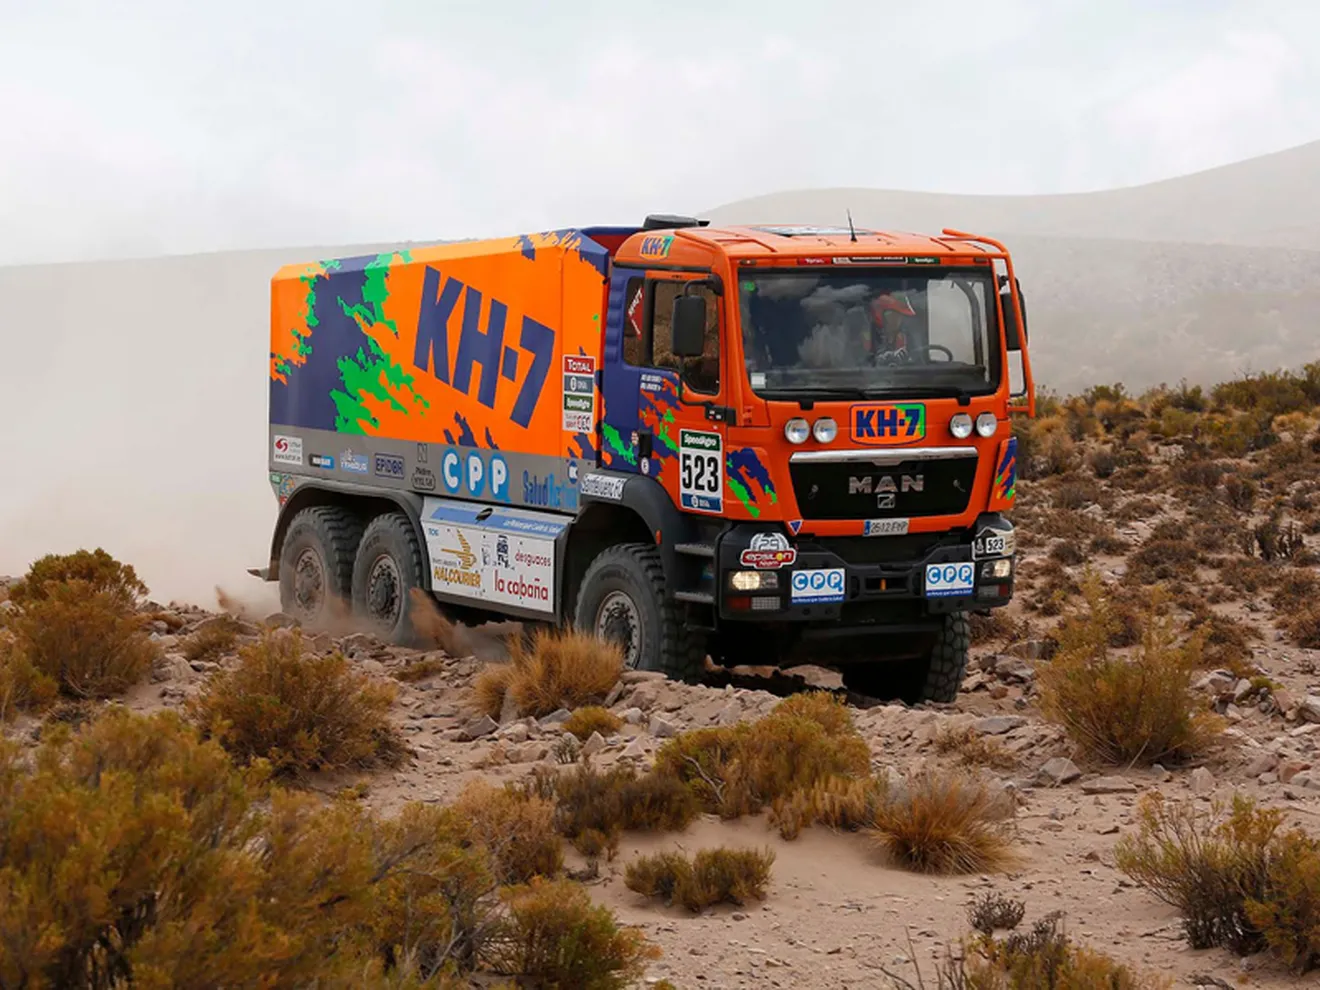 Dakar 2017: El KH-7 Epsilon Team busca repetir éxito